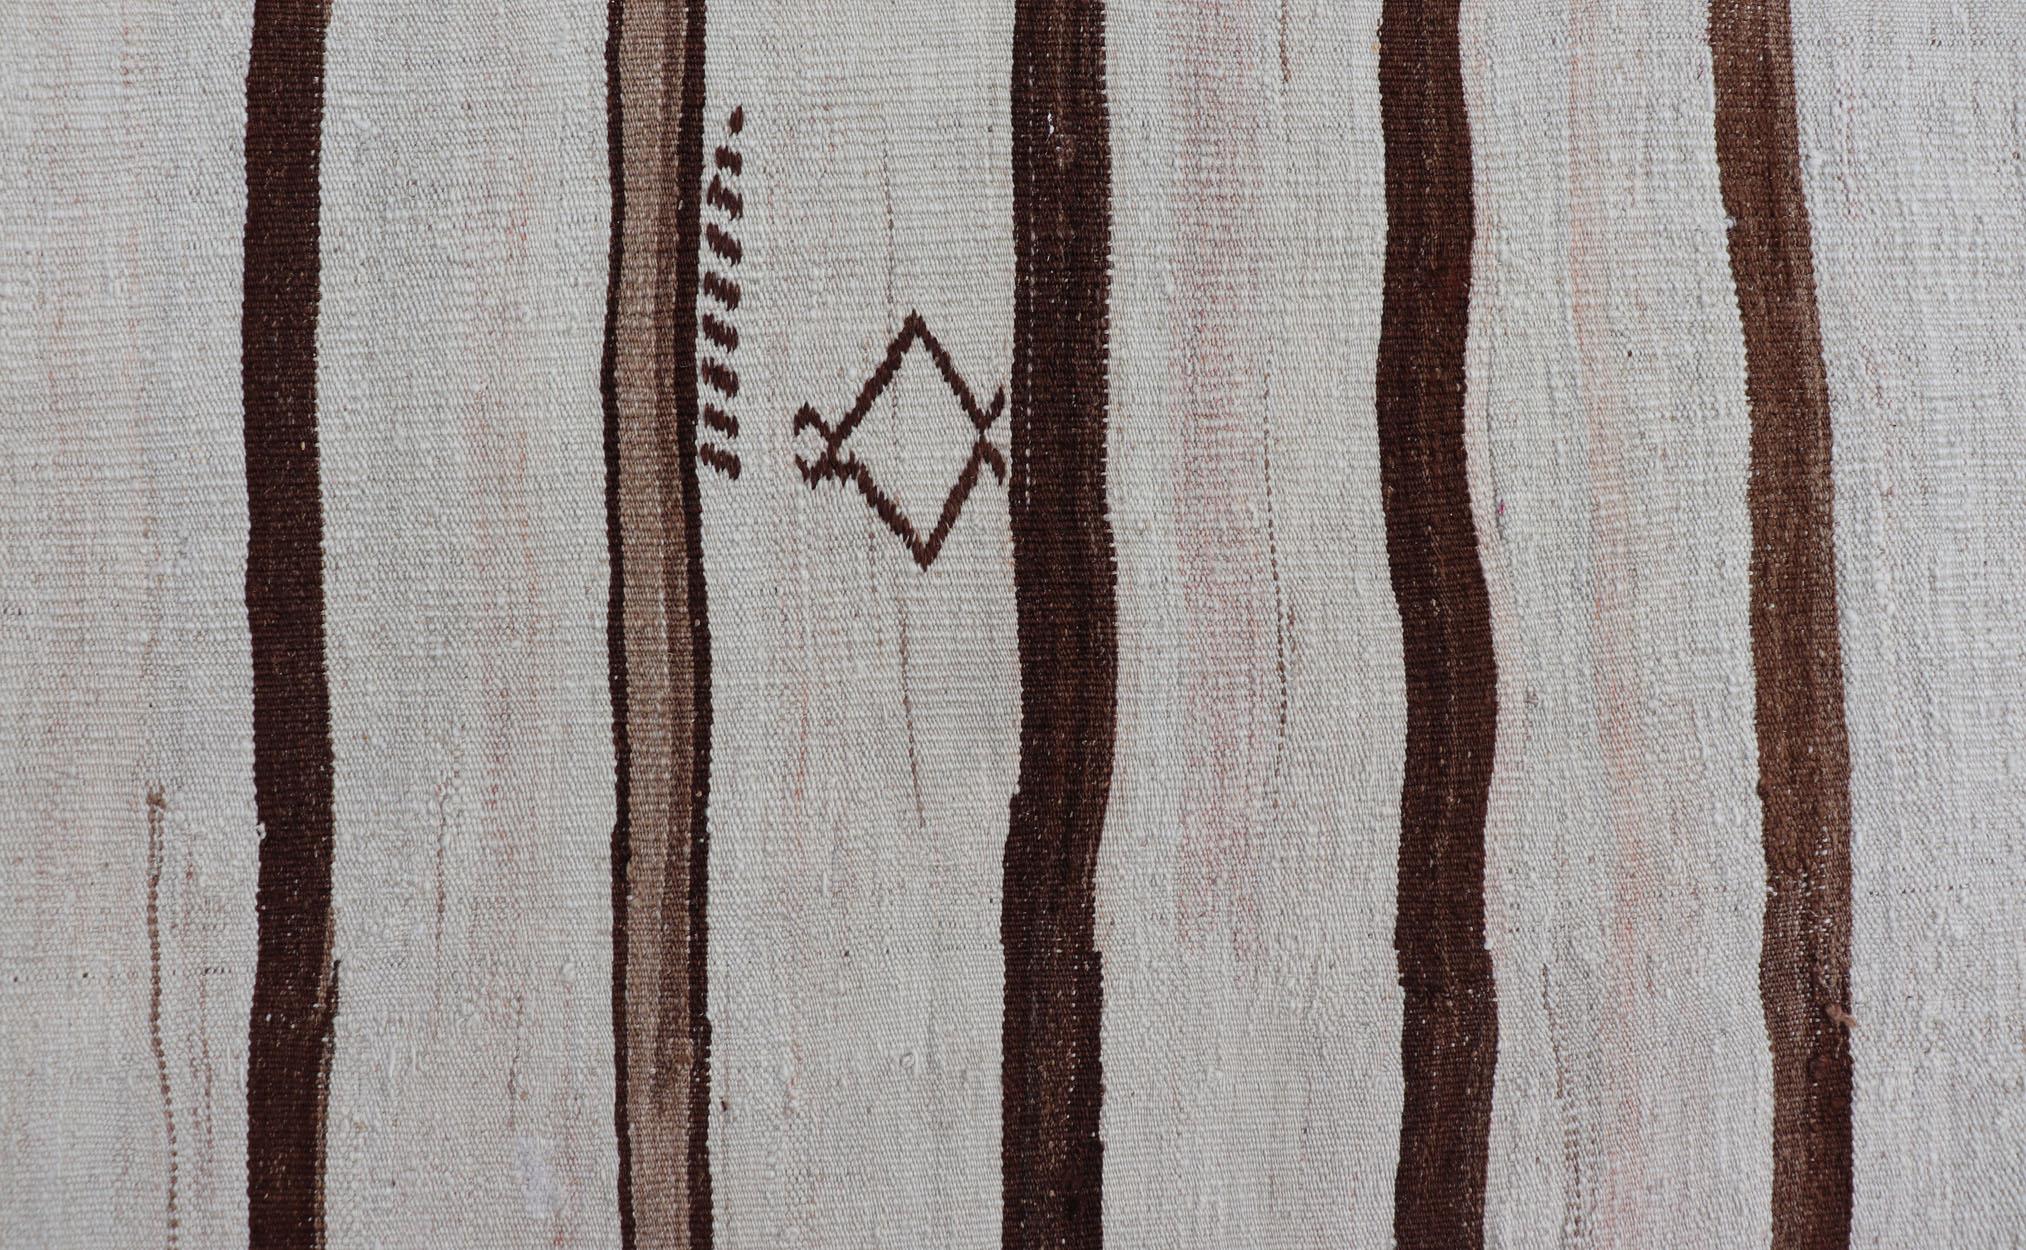 Measures: 5'8 x 12'3 
Flat-Weave Kilim Vintage Gallery Rug from Turkey with Horizontal Stripes. Keivan Woven Arts /  rug EN-13434, country of origin / type: Turkey / Kilim, circa 1950

This vintage flat-woven Kilim features a minimalist design